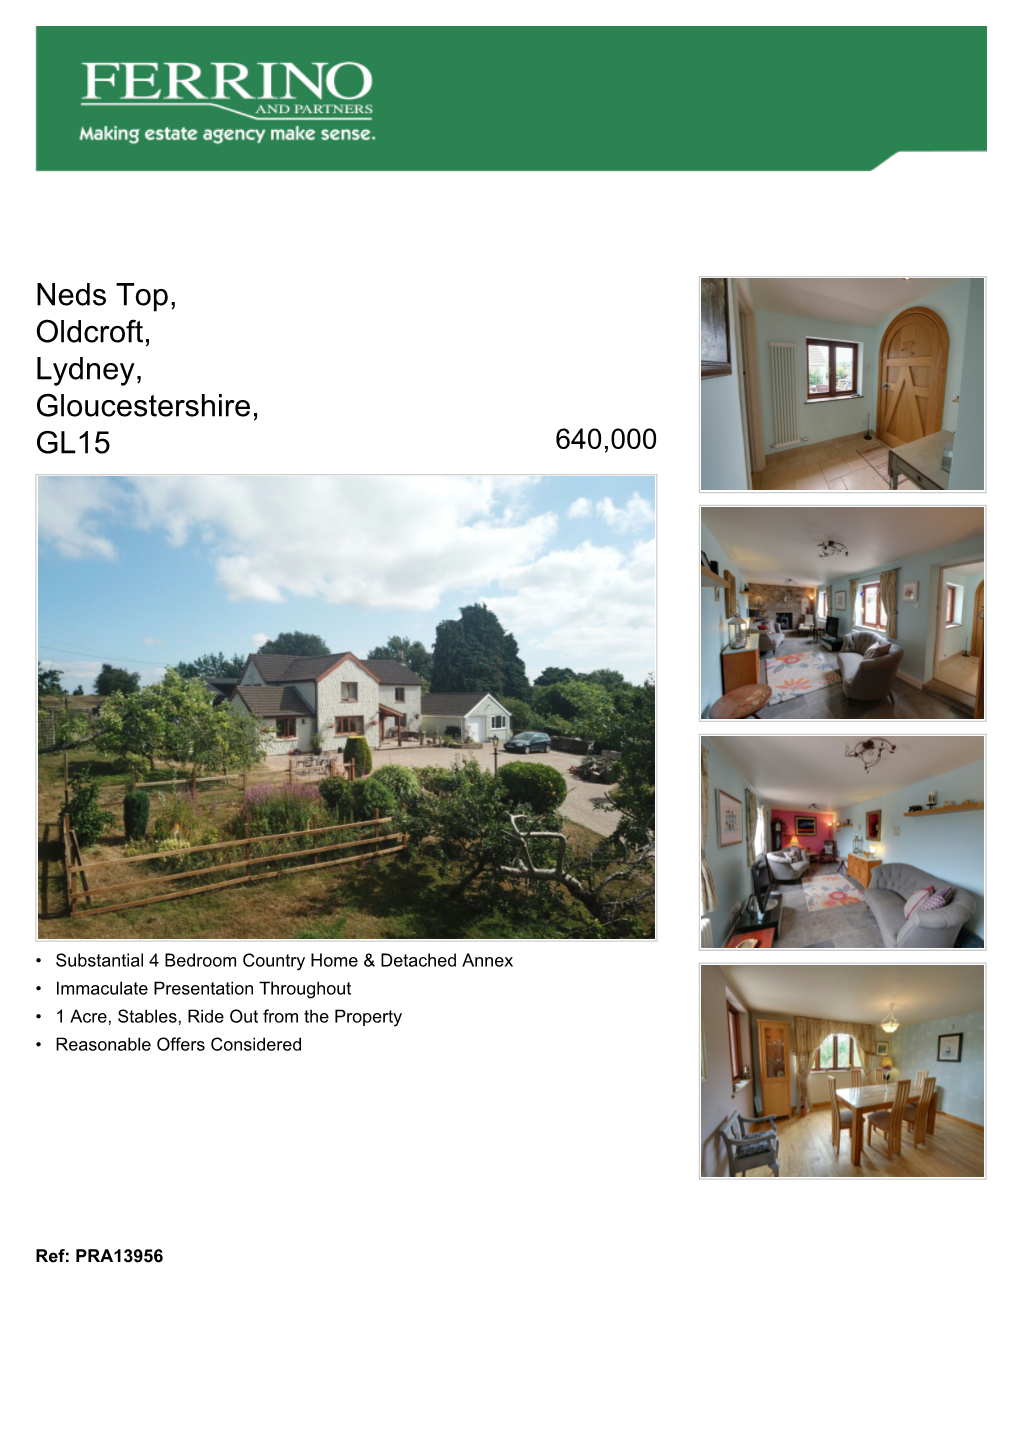 Neds Top, Oldcroft, Lydney, Gloucestershire, GL15 640,000